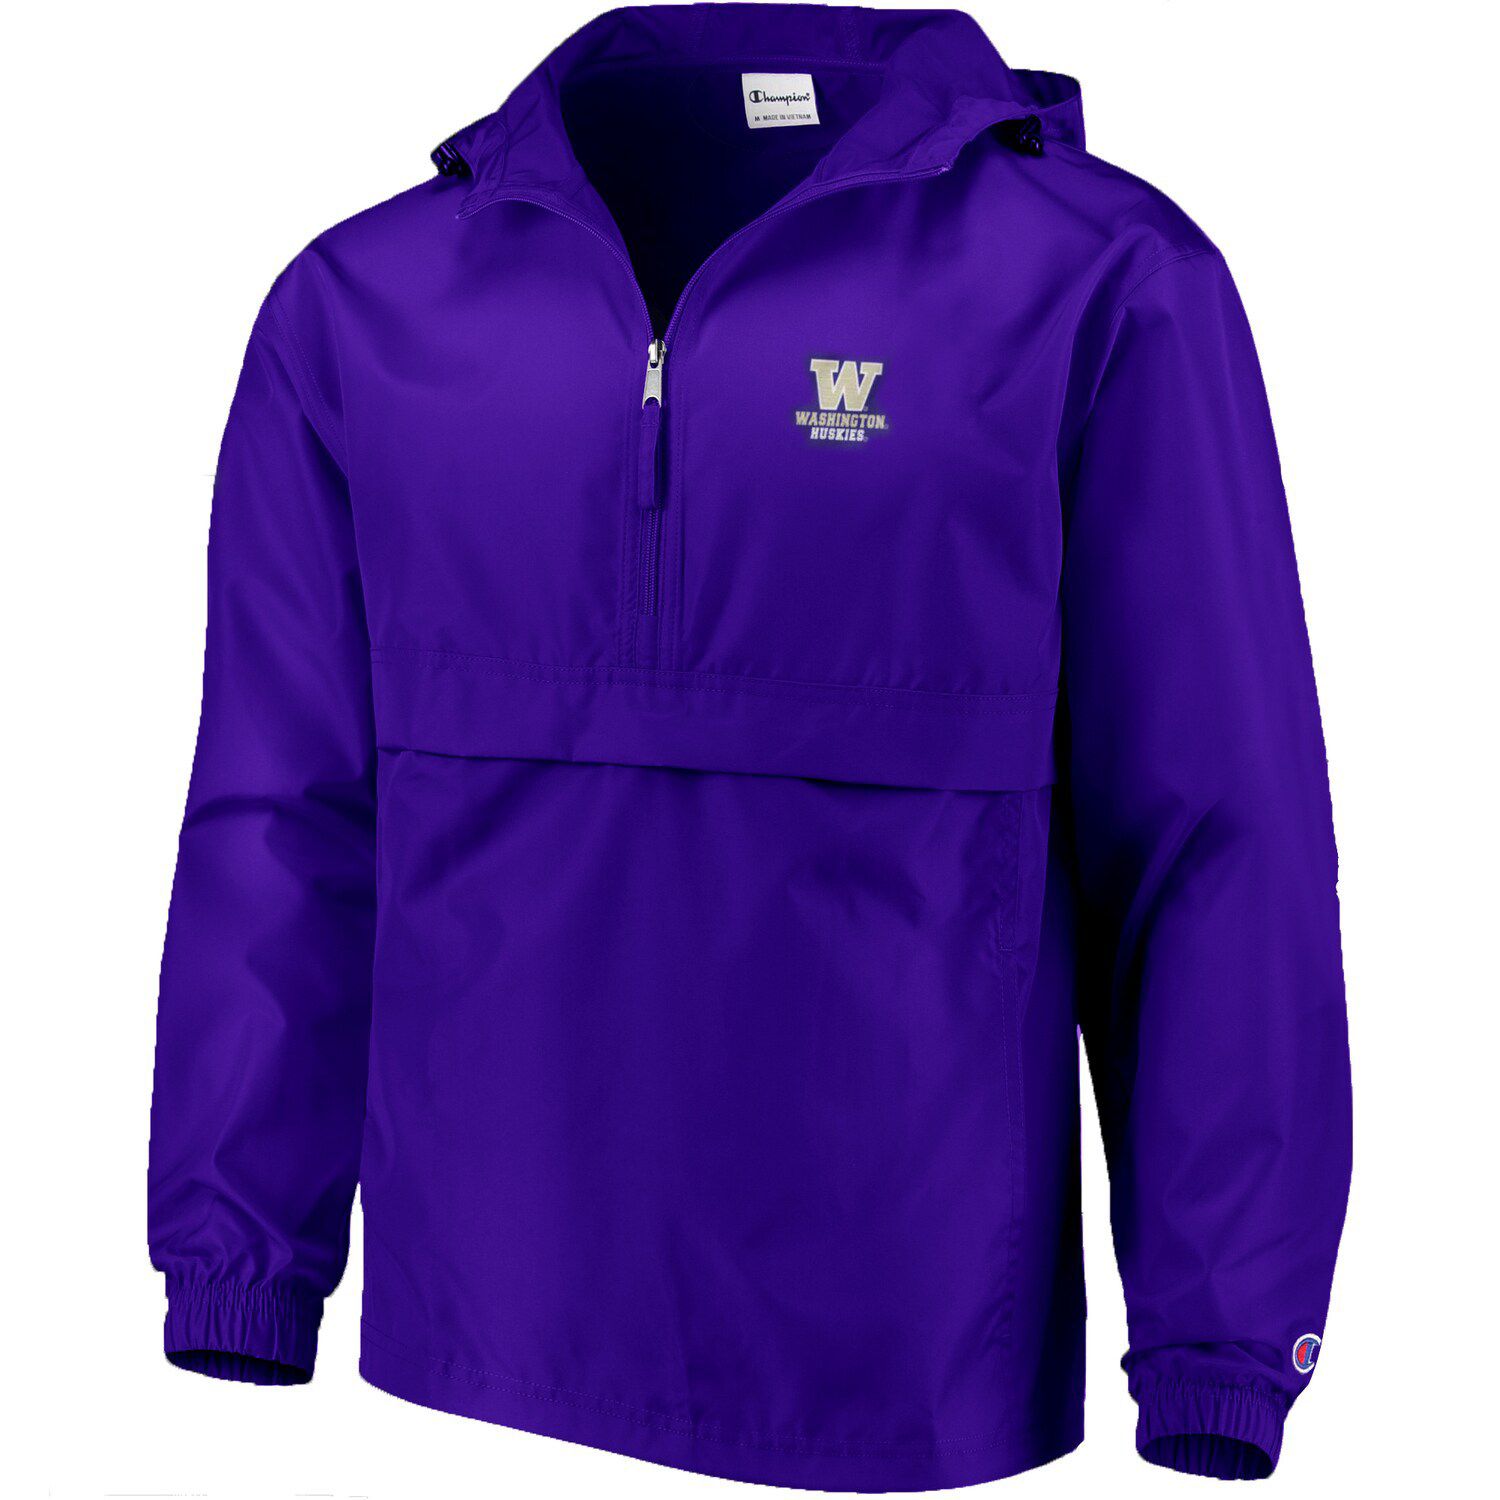 champion purple jacket